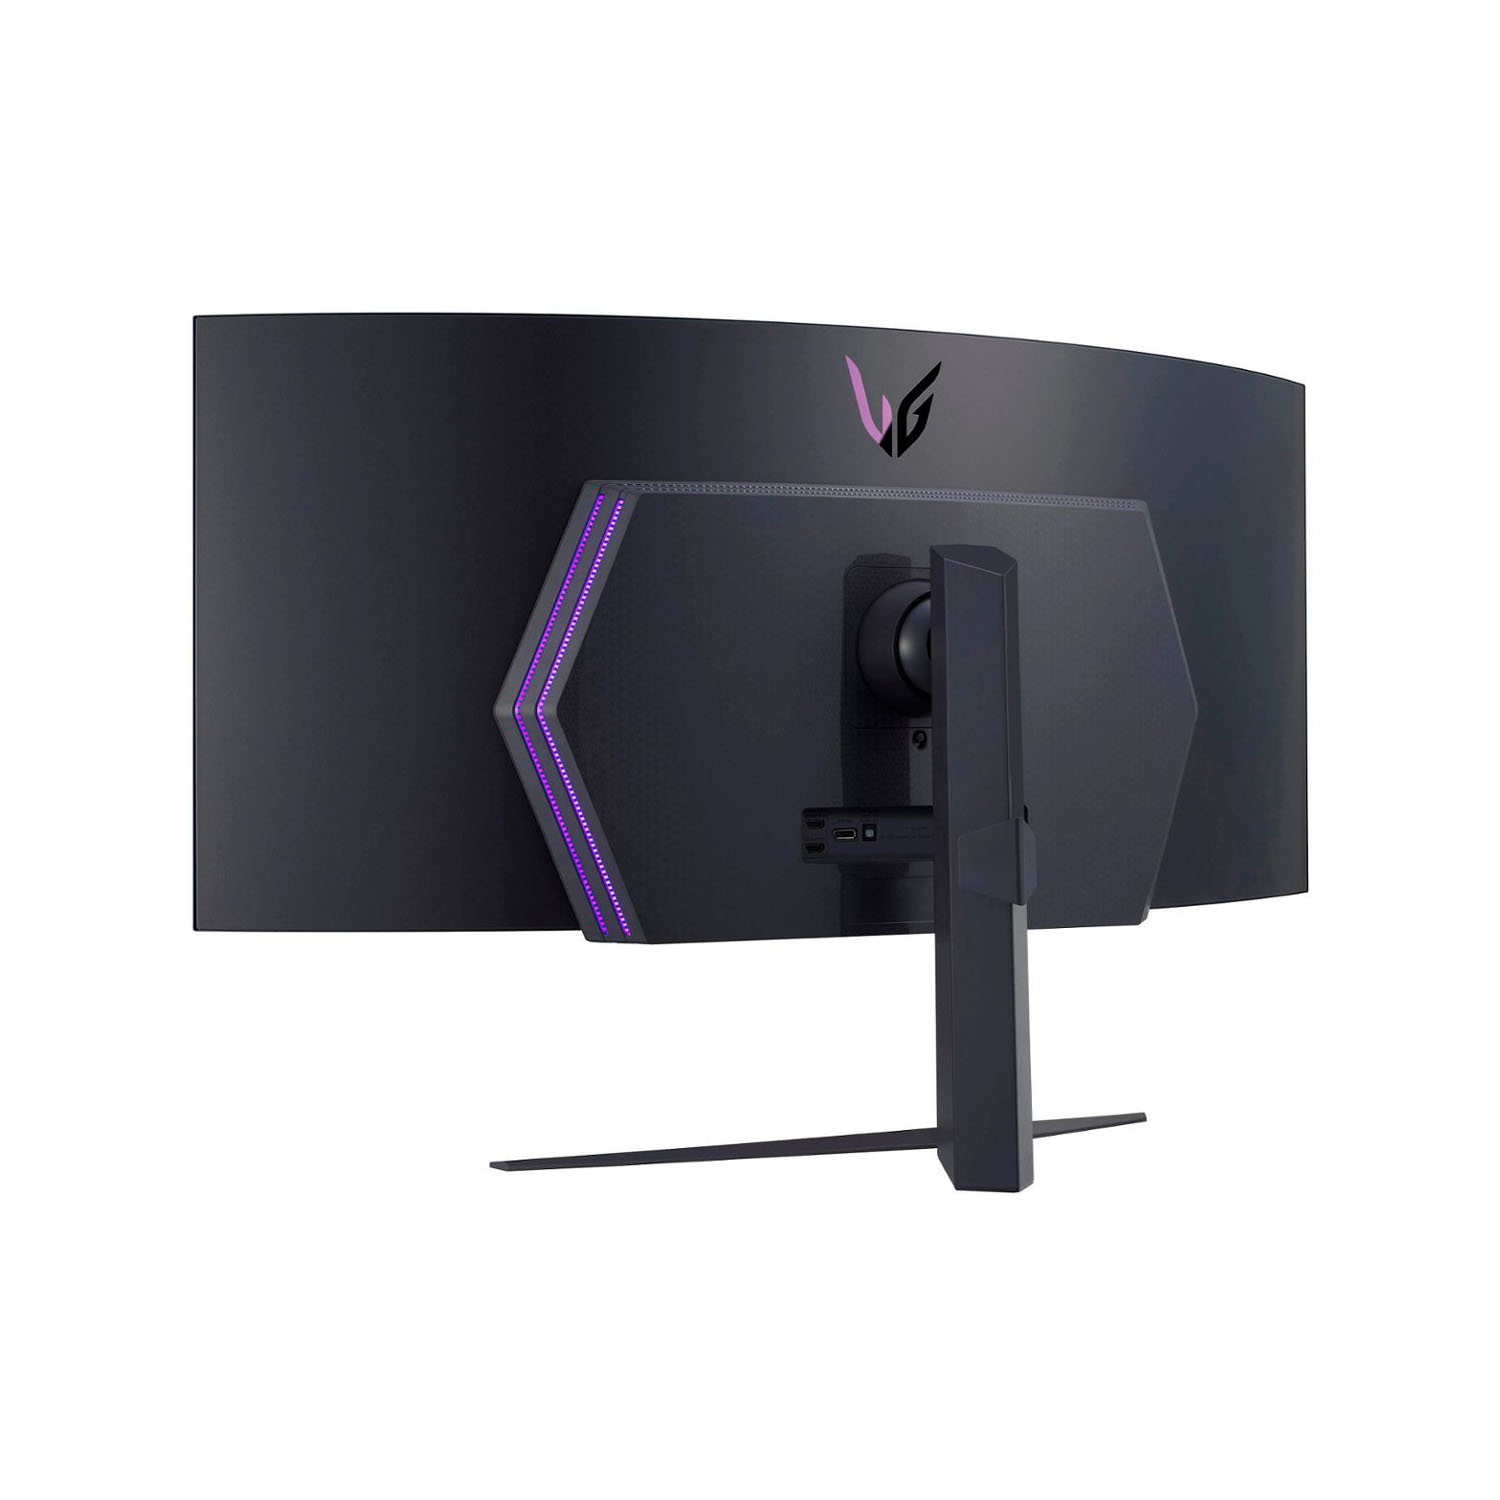 LG - Monitor para juegos UltraGear OLED curvo WQHD 240 Hz 0,03 ms compatible con FreeSync y NVIDIA G-Sync con HDR10 - Negro